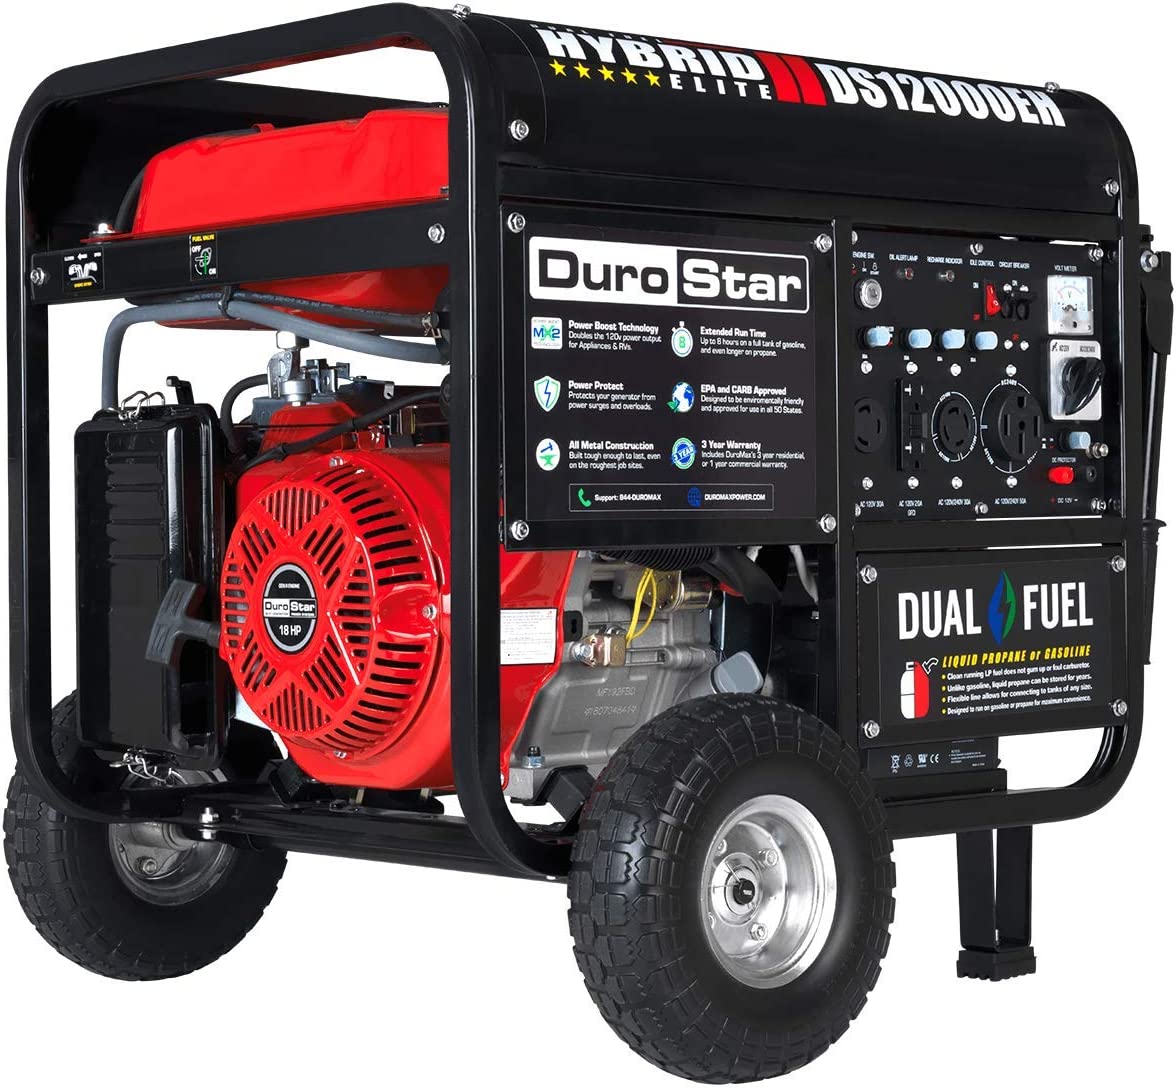 Gas or Propane Dual Fuel Electric Start Portable Generator